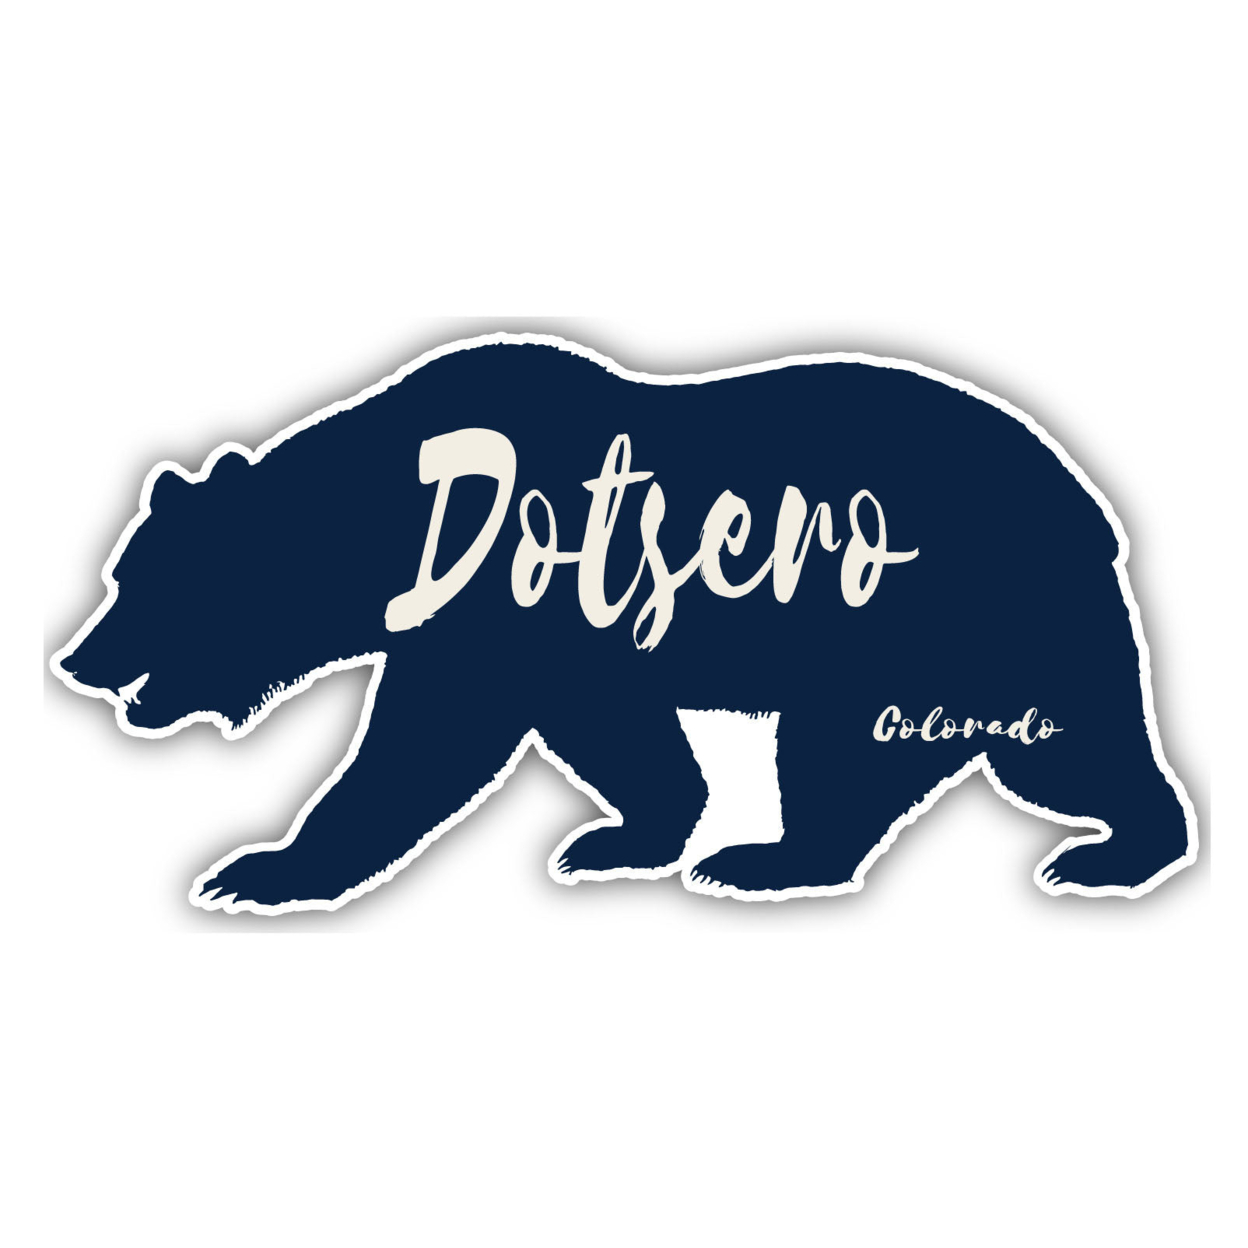 Dotsero Colorado Souvenir Decorative Stickers (Choose Theme And Size) - Single Unit, 2-Inch, Bear